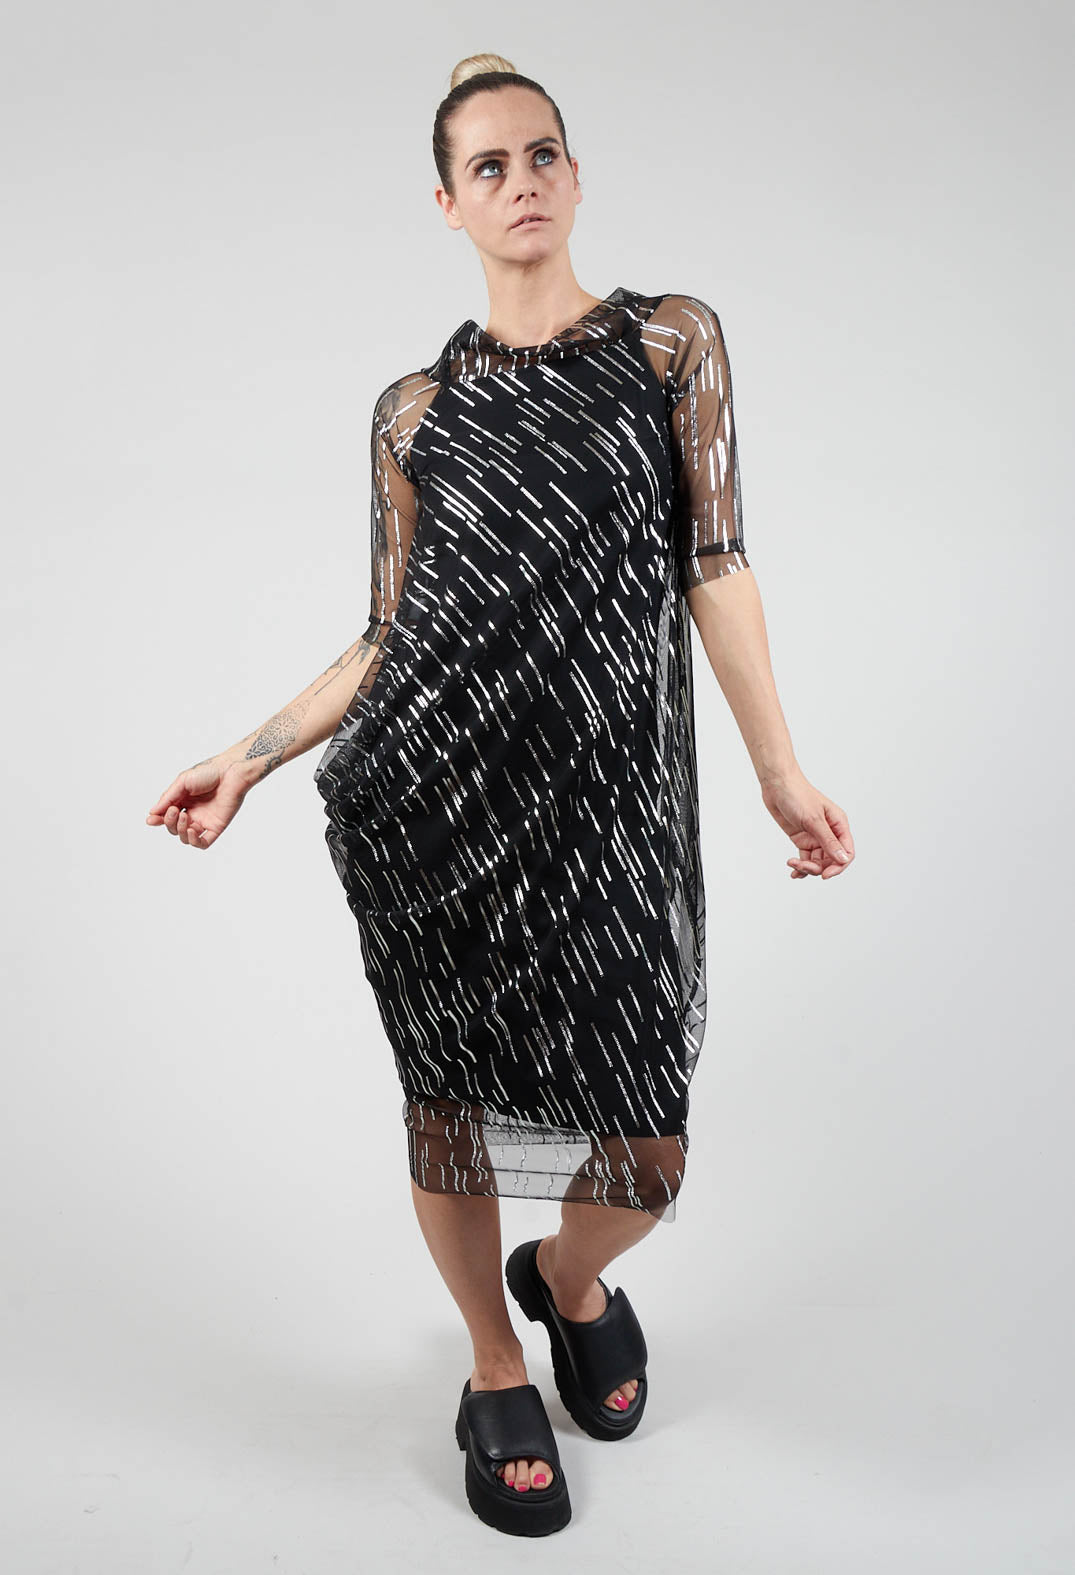 Enki Dress in Black Silver